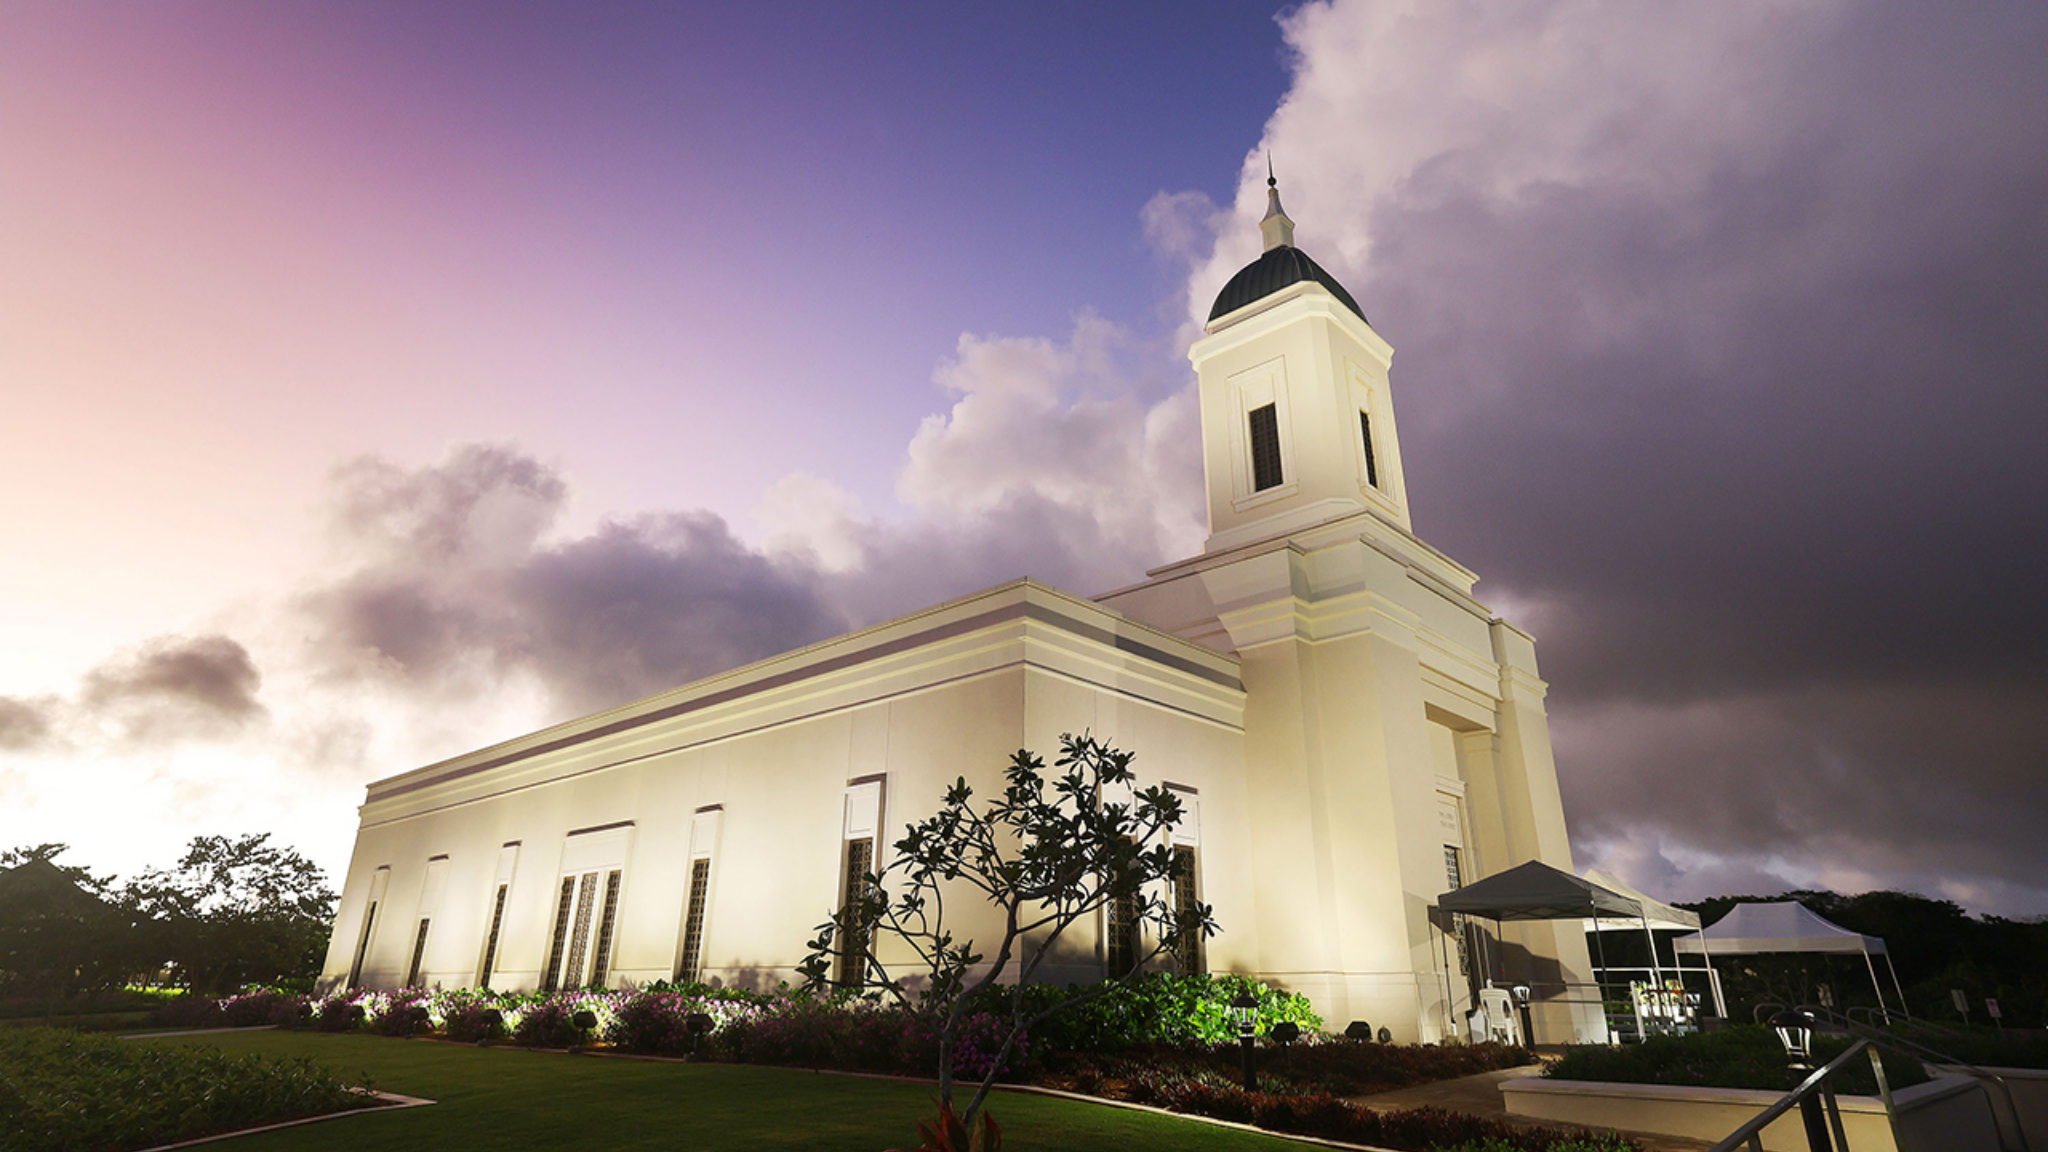 The Yigo Guam Temple of The Church of Jesus Christ of Latter-day Saints was dedicated on Sunday.
Ph...